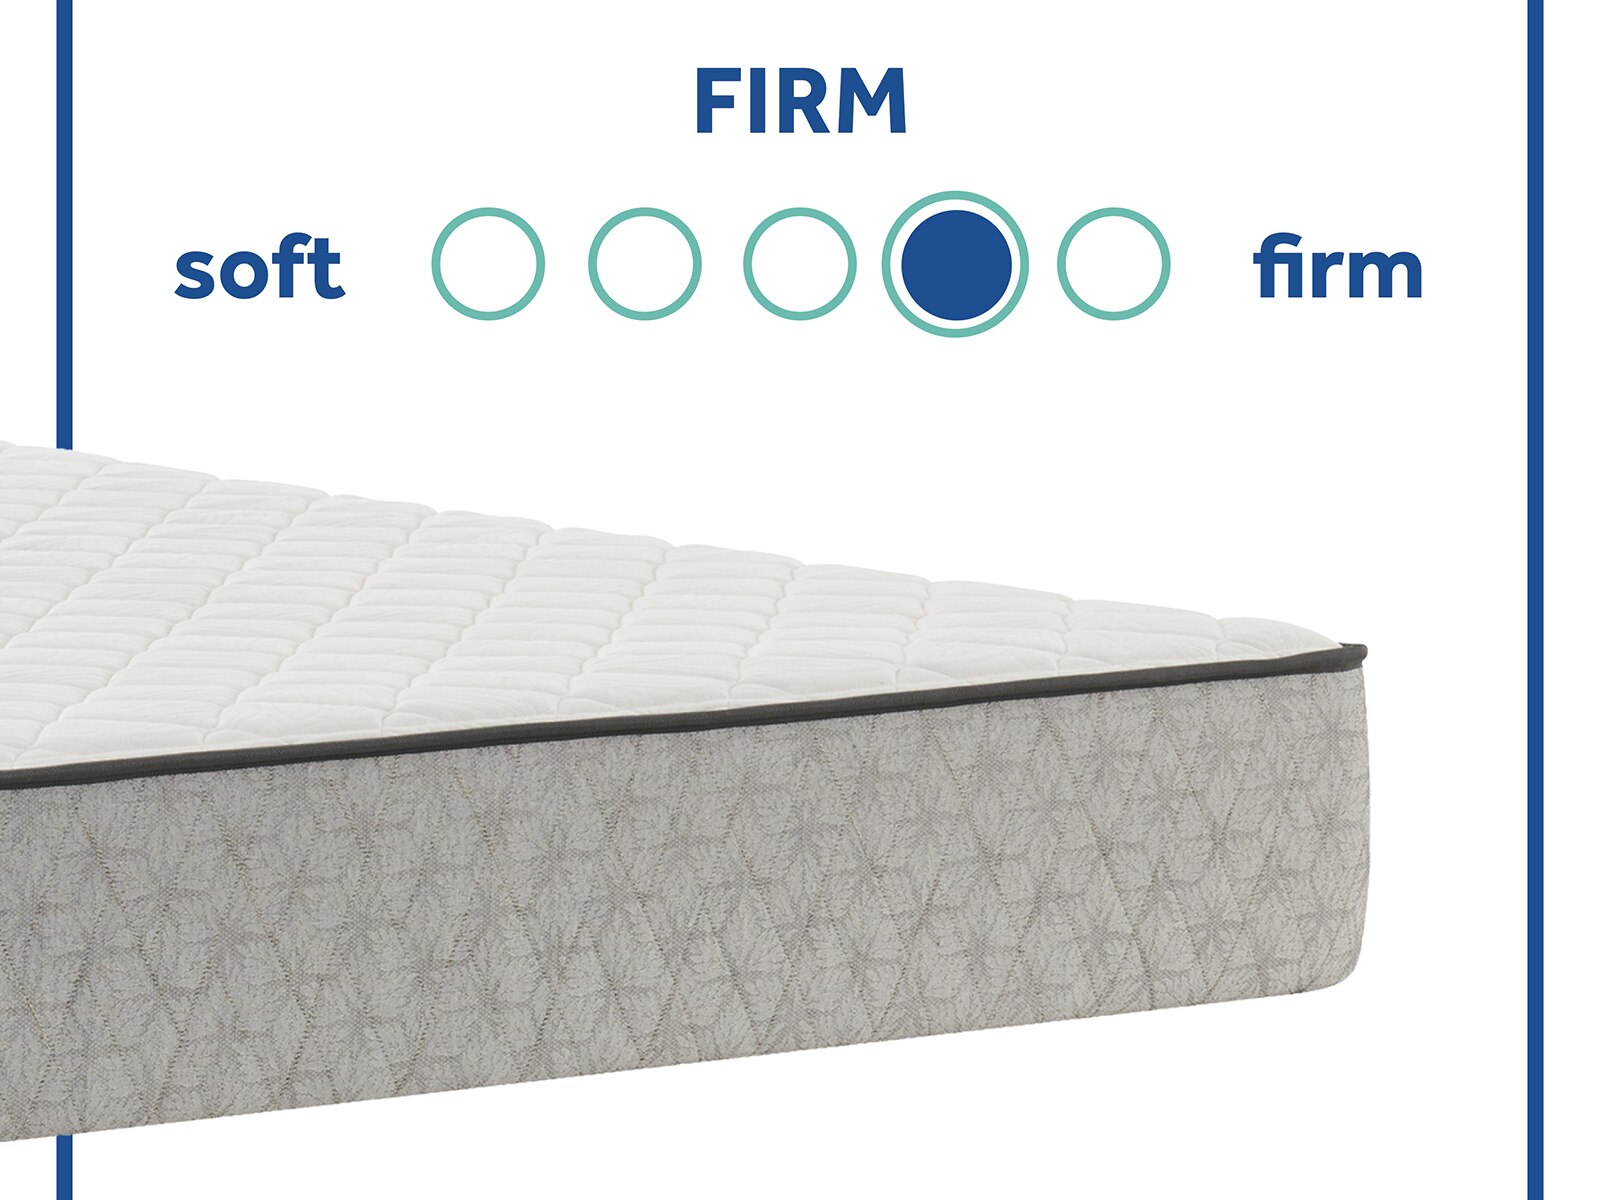 response essentials maplewood 8.5 firm mattress reviews